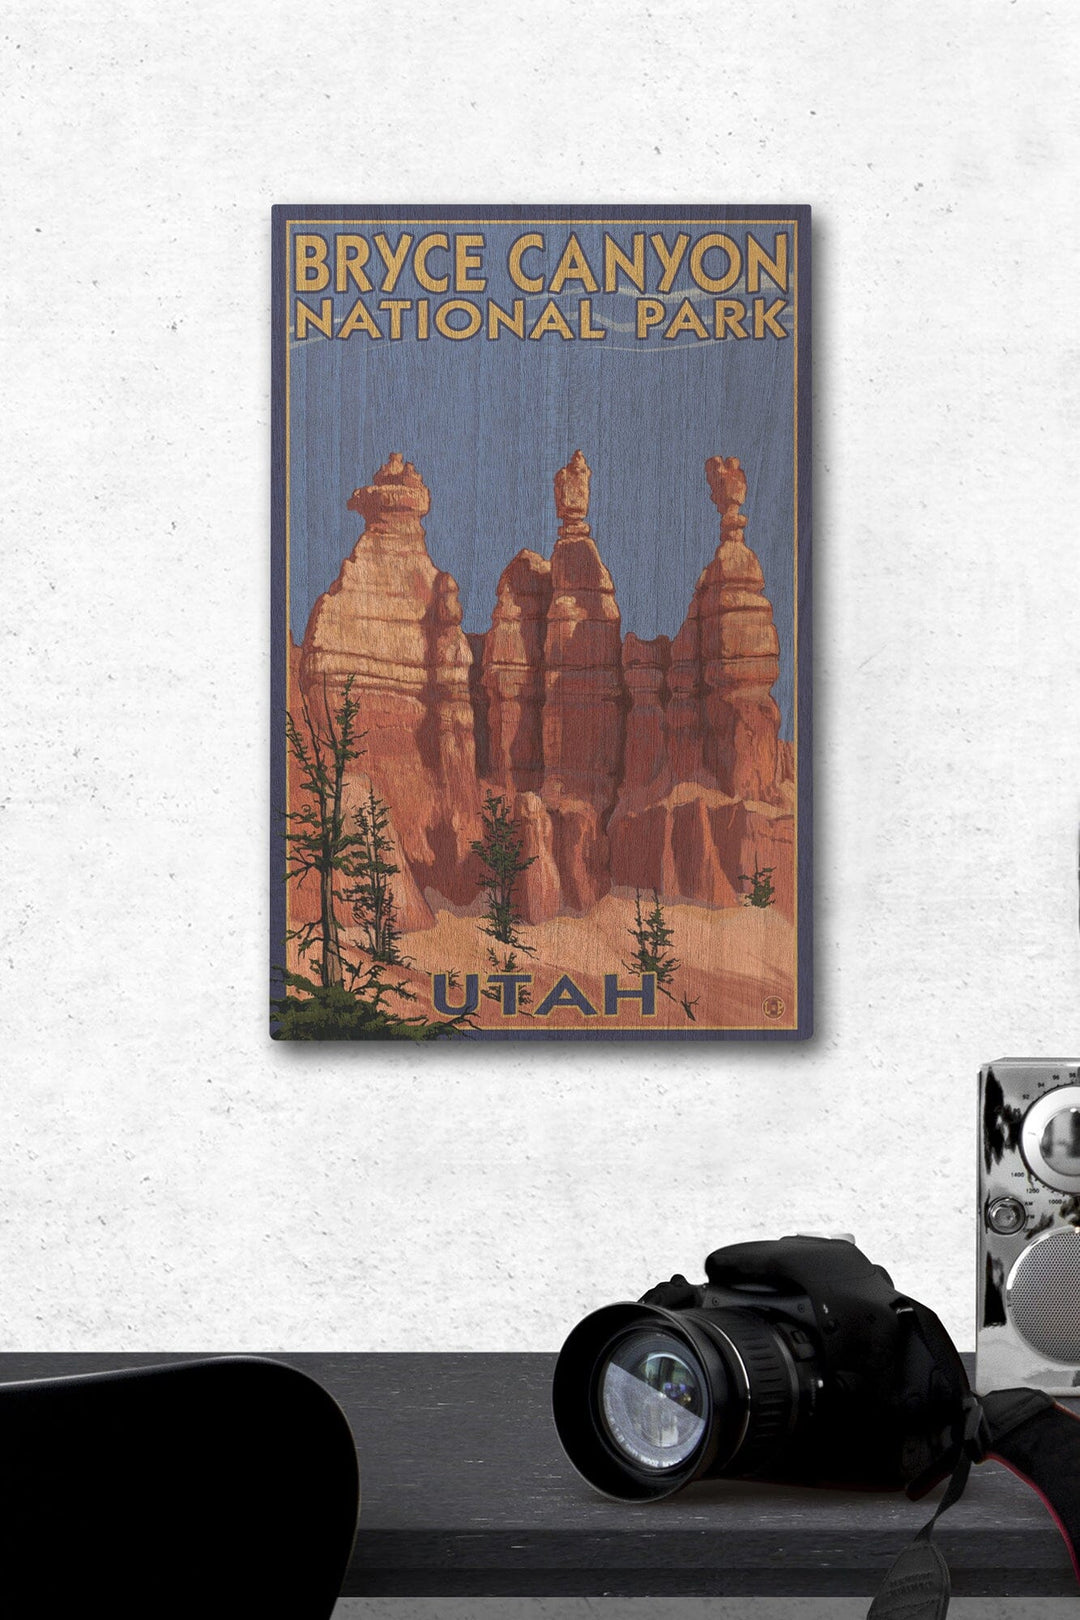 Bryce Canyon National Park, Utah, Summer #2, Lantern Press Artwork, Wood Signs and Postcards Wood Lantern Press 12 x 18 Wood Gallery Print 